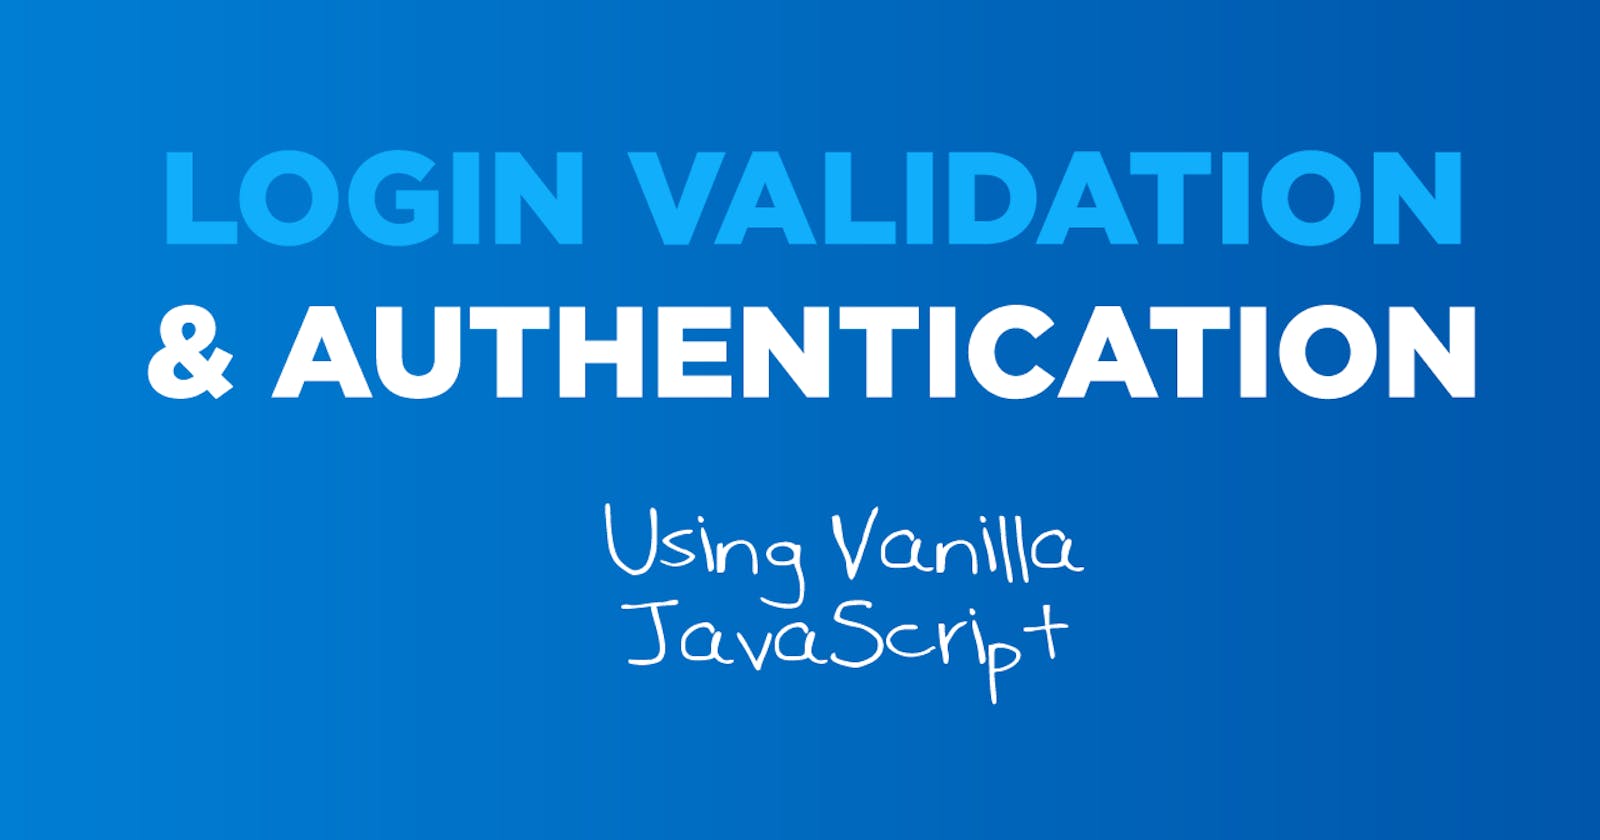 Login Validation & Authentication Using Vanilla Javascript